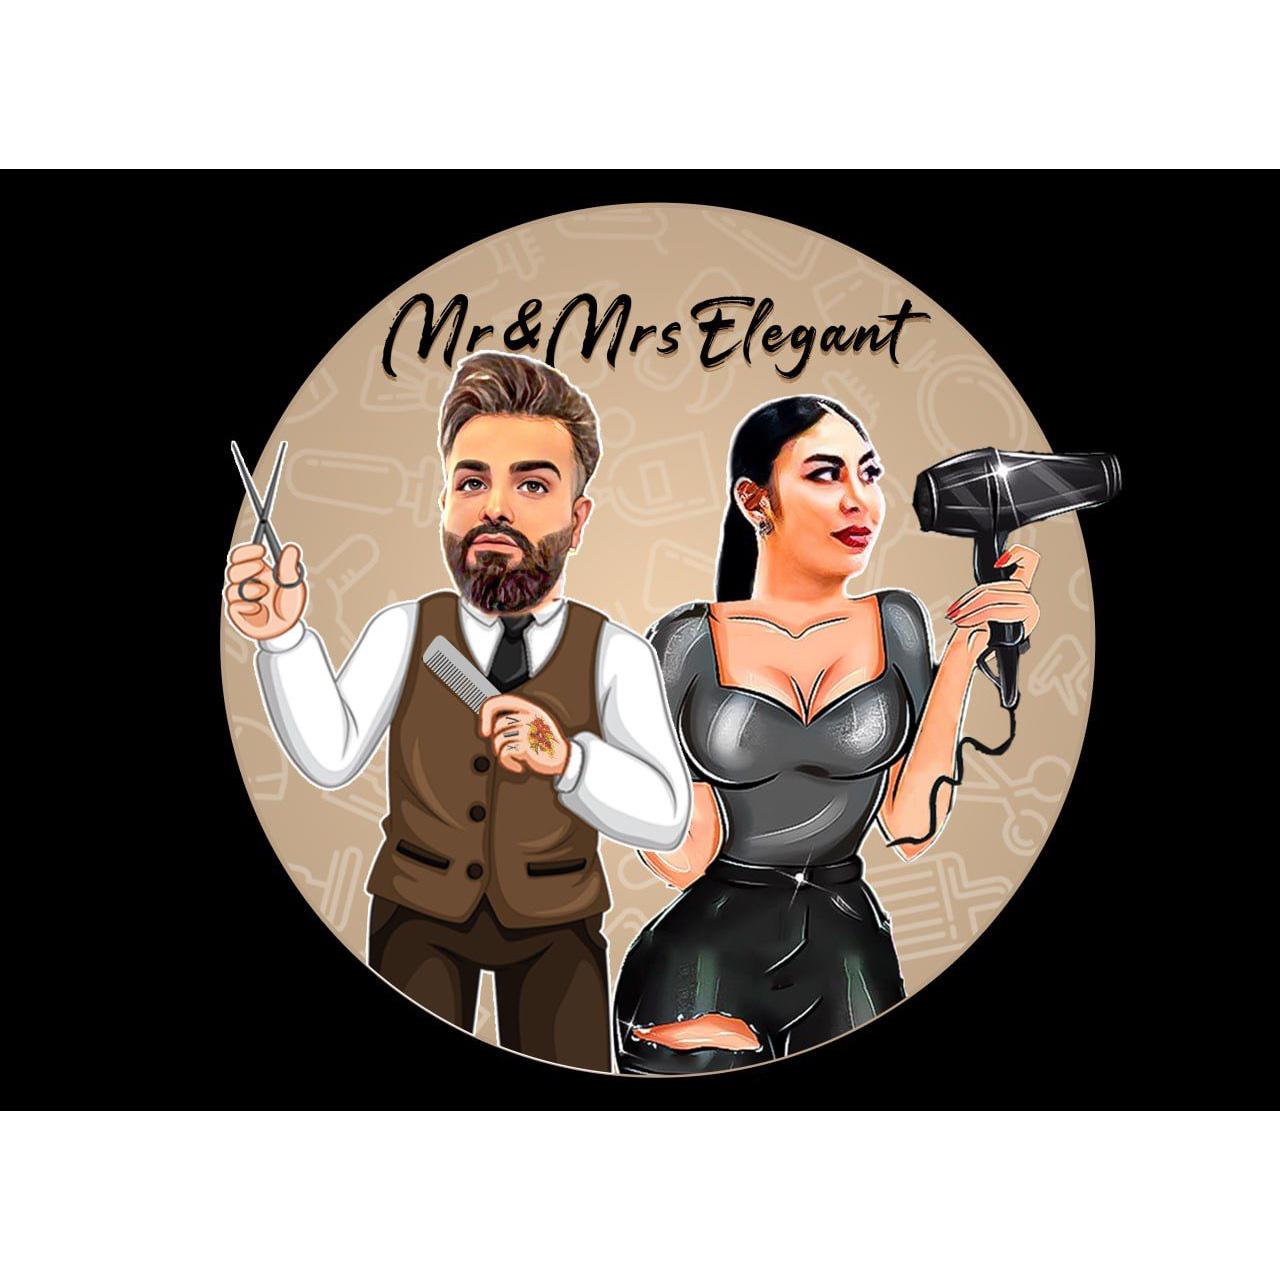 Mr & Mrs Elegant (Friseur, Beauty & Tattoo) in Köln - Logo